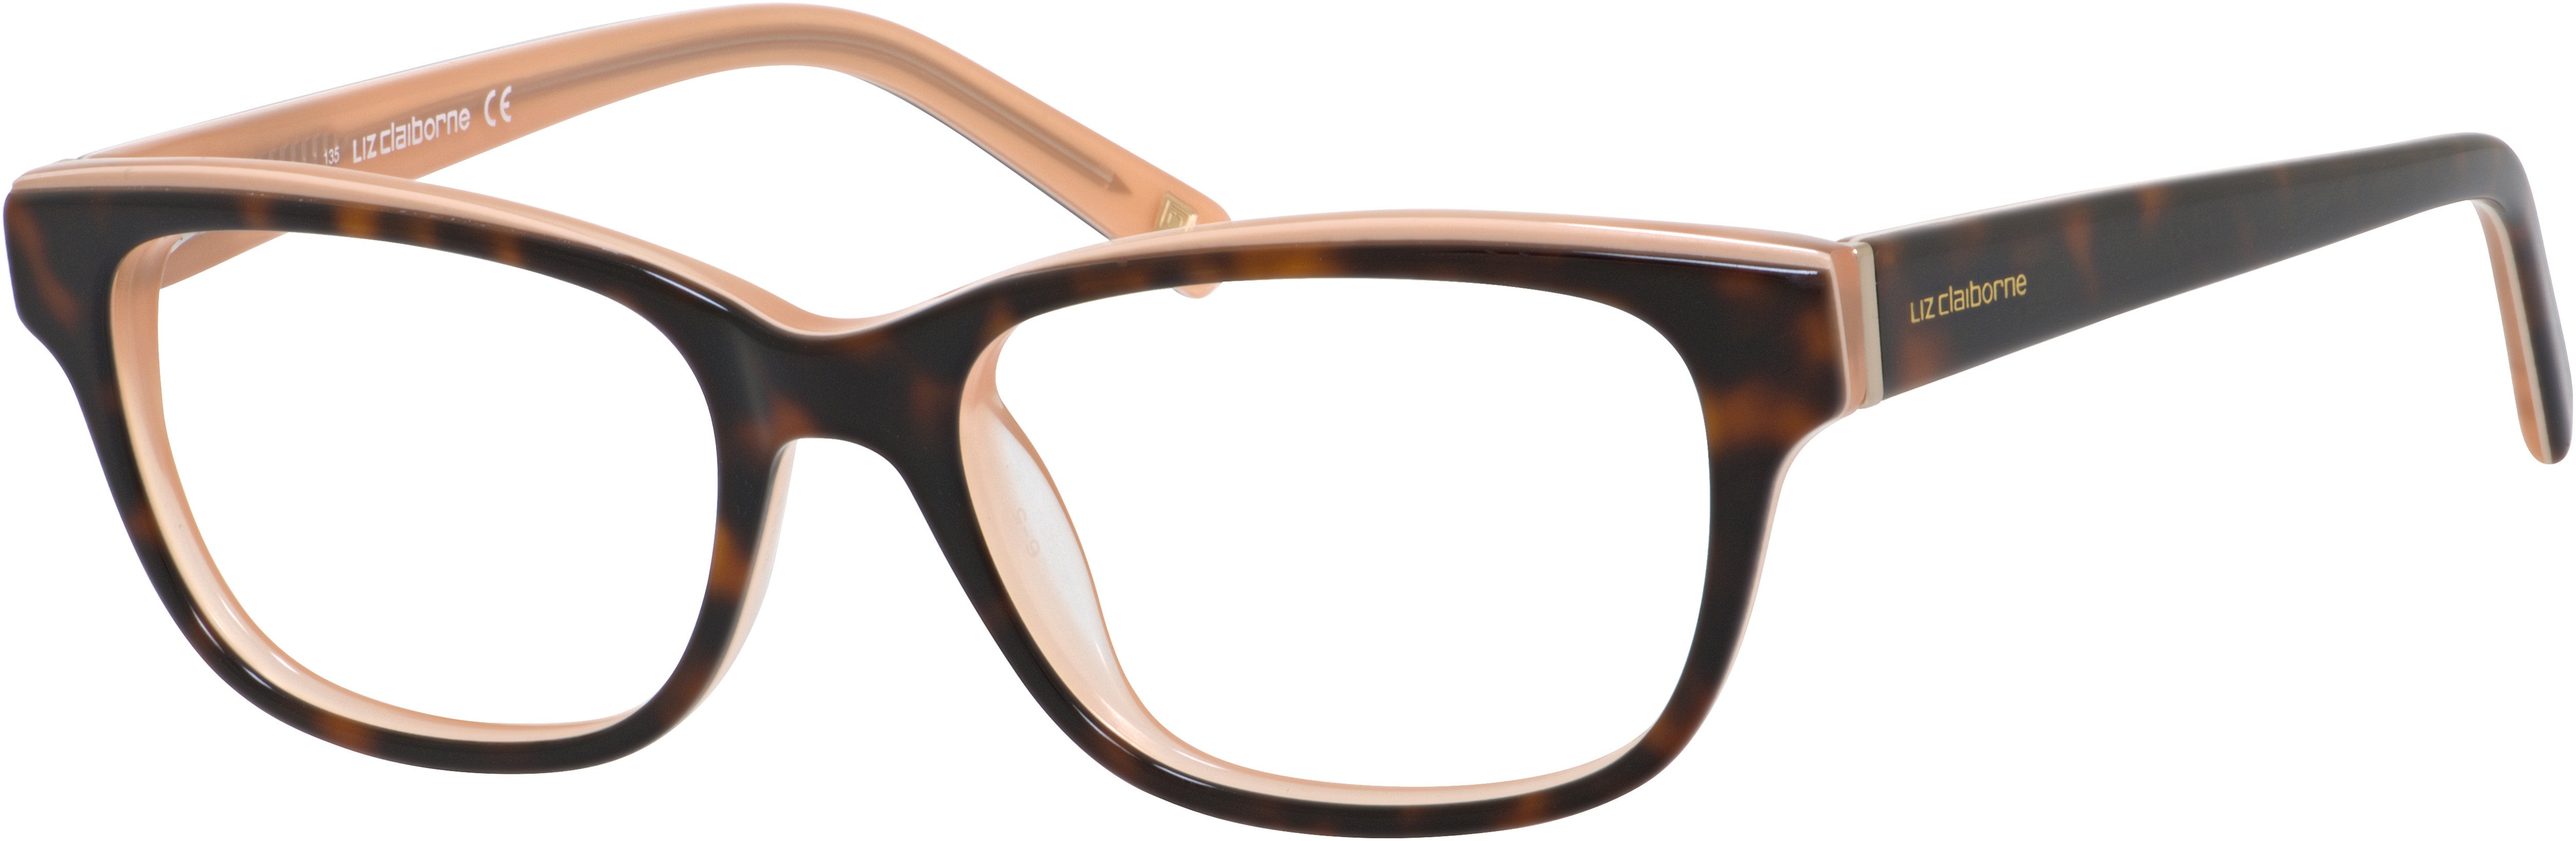  Liz Claiborne 437 Rectangular Eyeglasses 0DM9-0DM9  Tortoise Peach (00 Demo Lens)